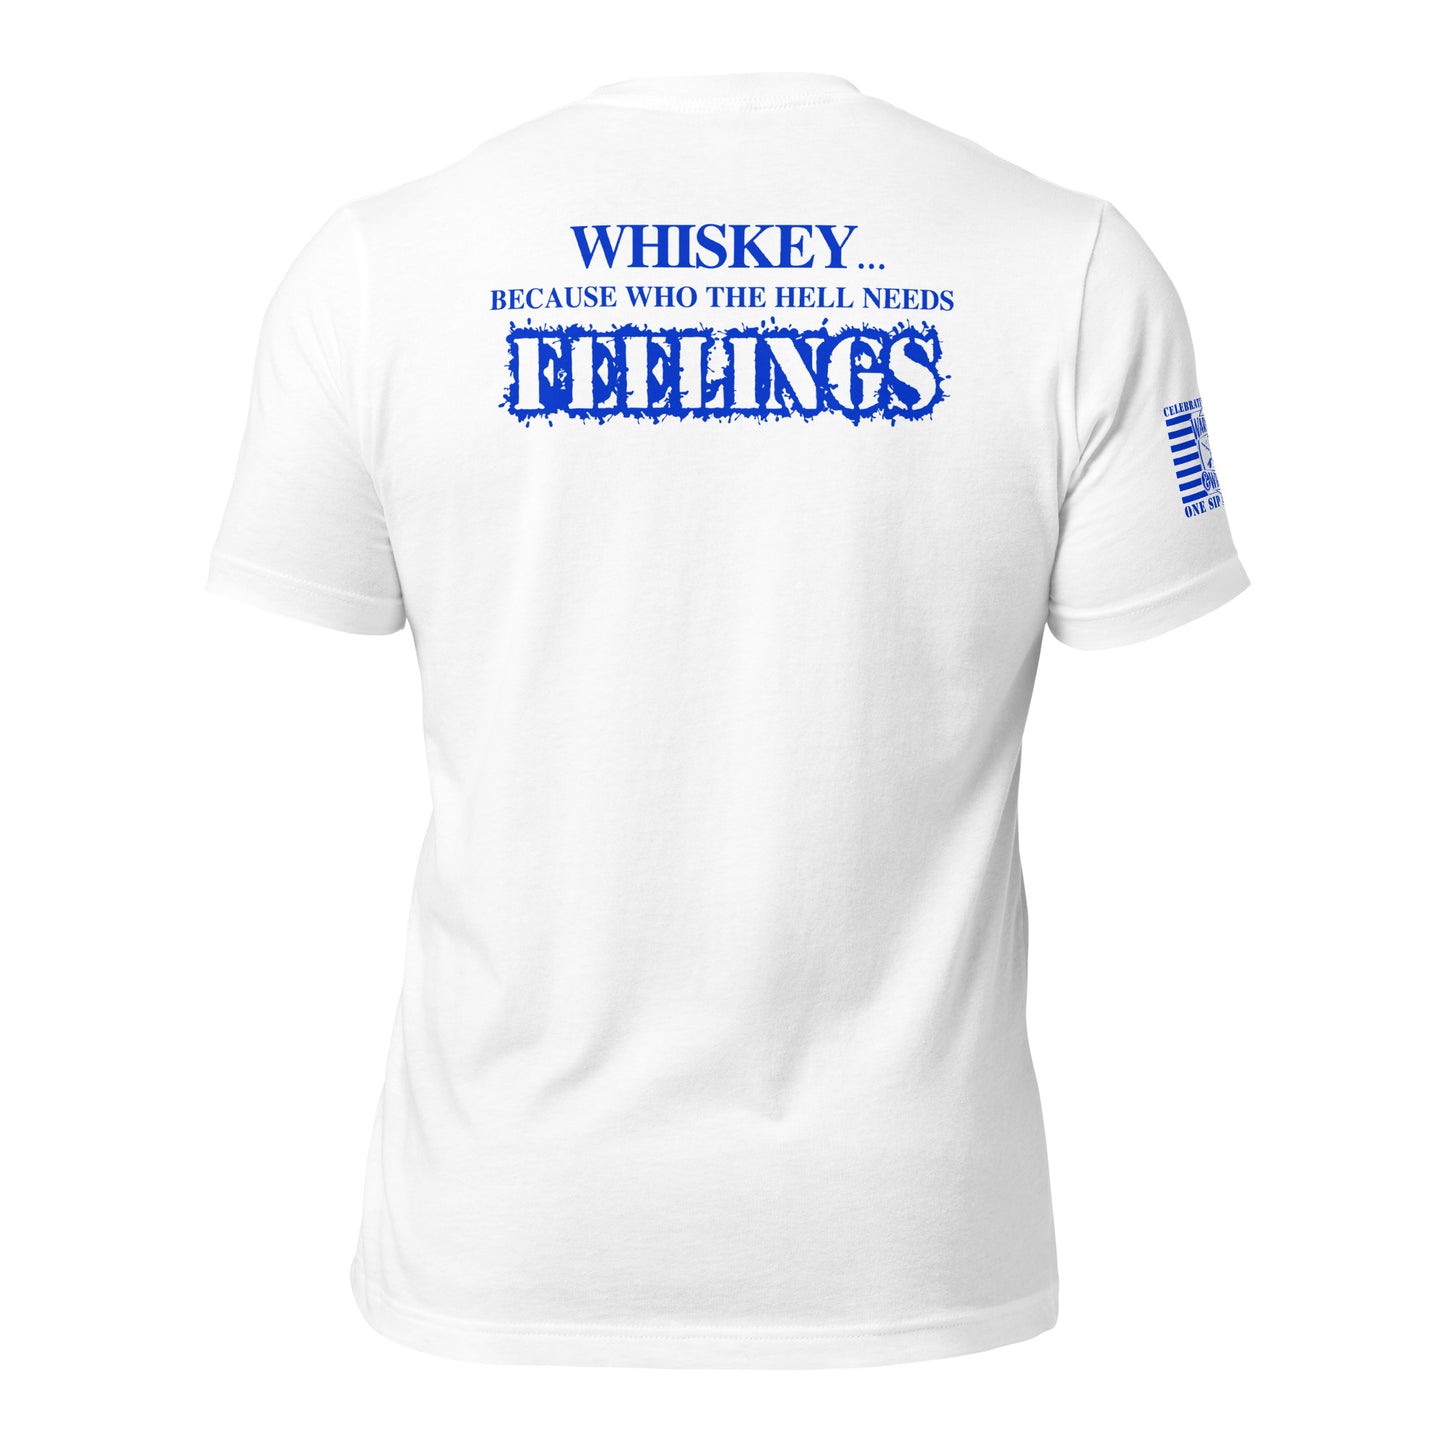 Who The Hell Needs Feelings T-shirt